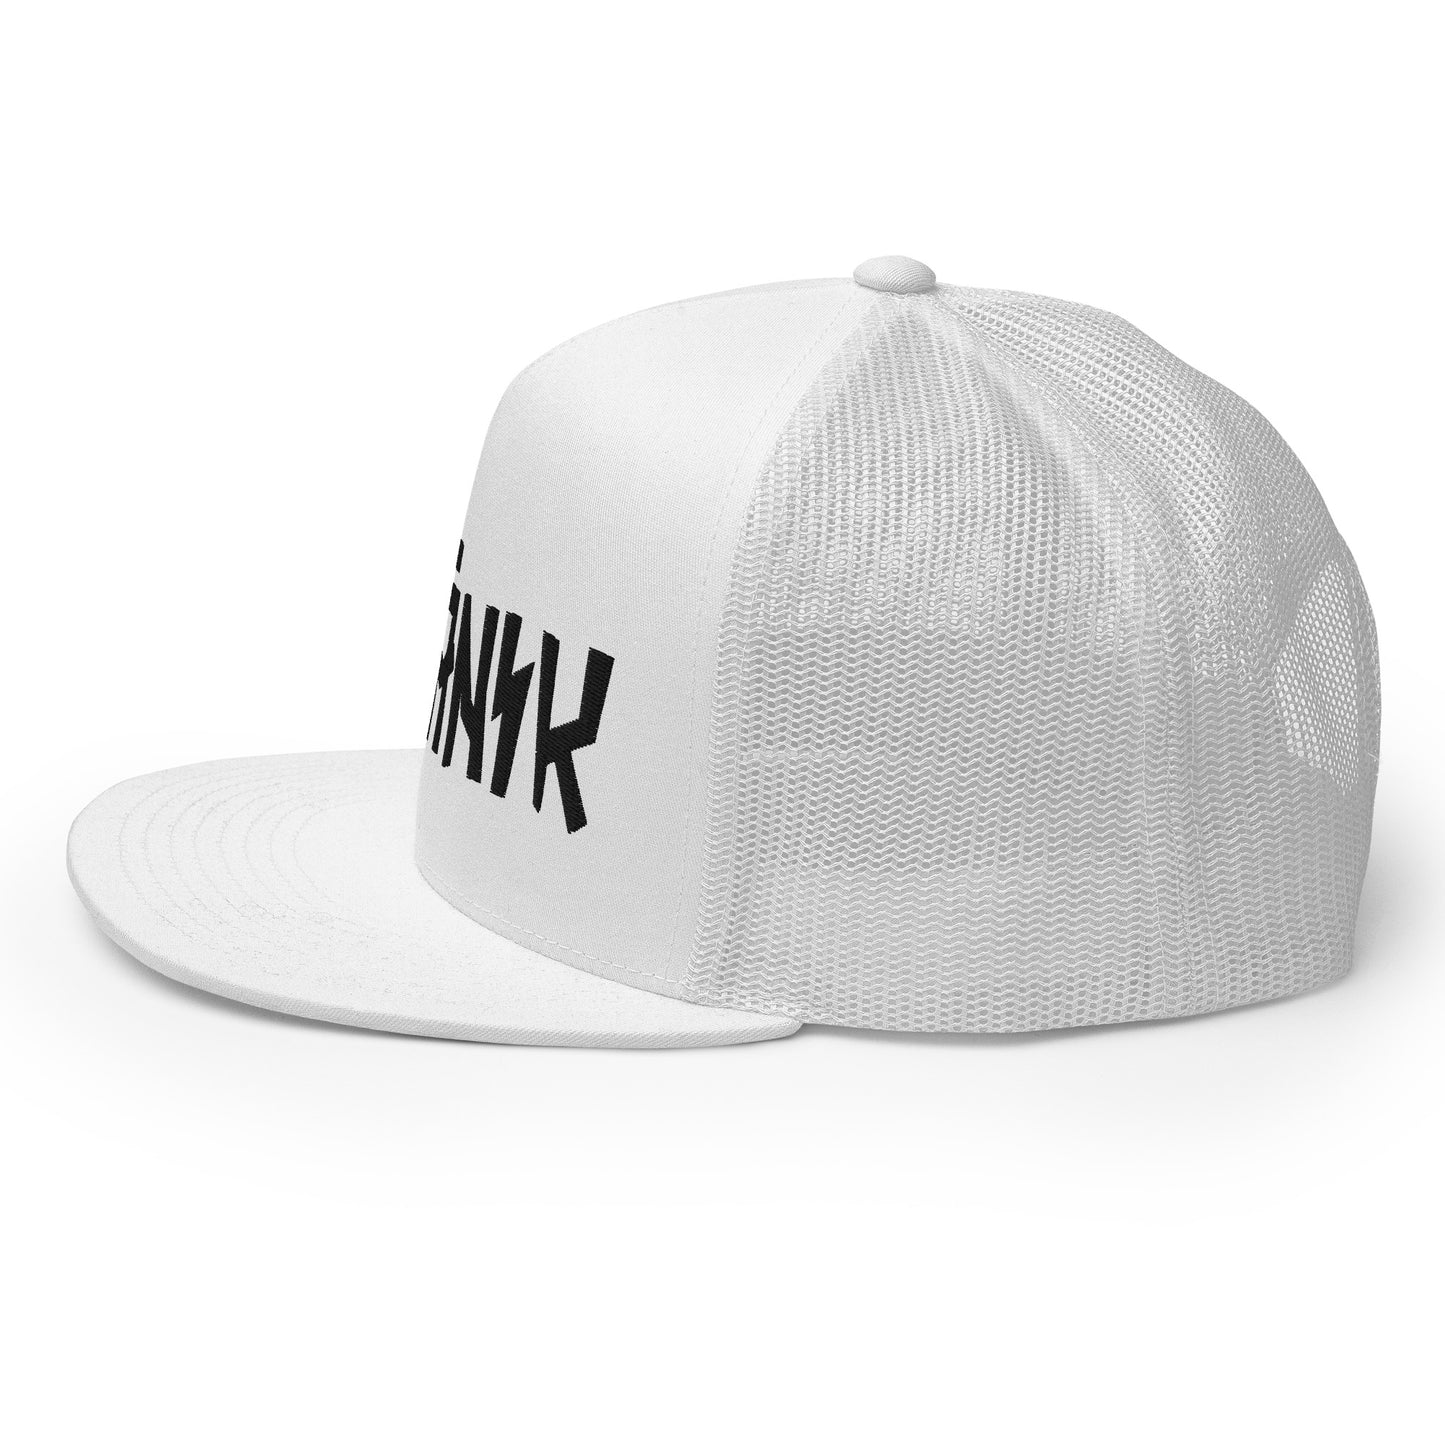 Kranik Brand Hat / Trucker Cap / Moto Logo / 3D Puff / White / Black